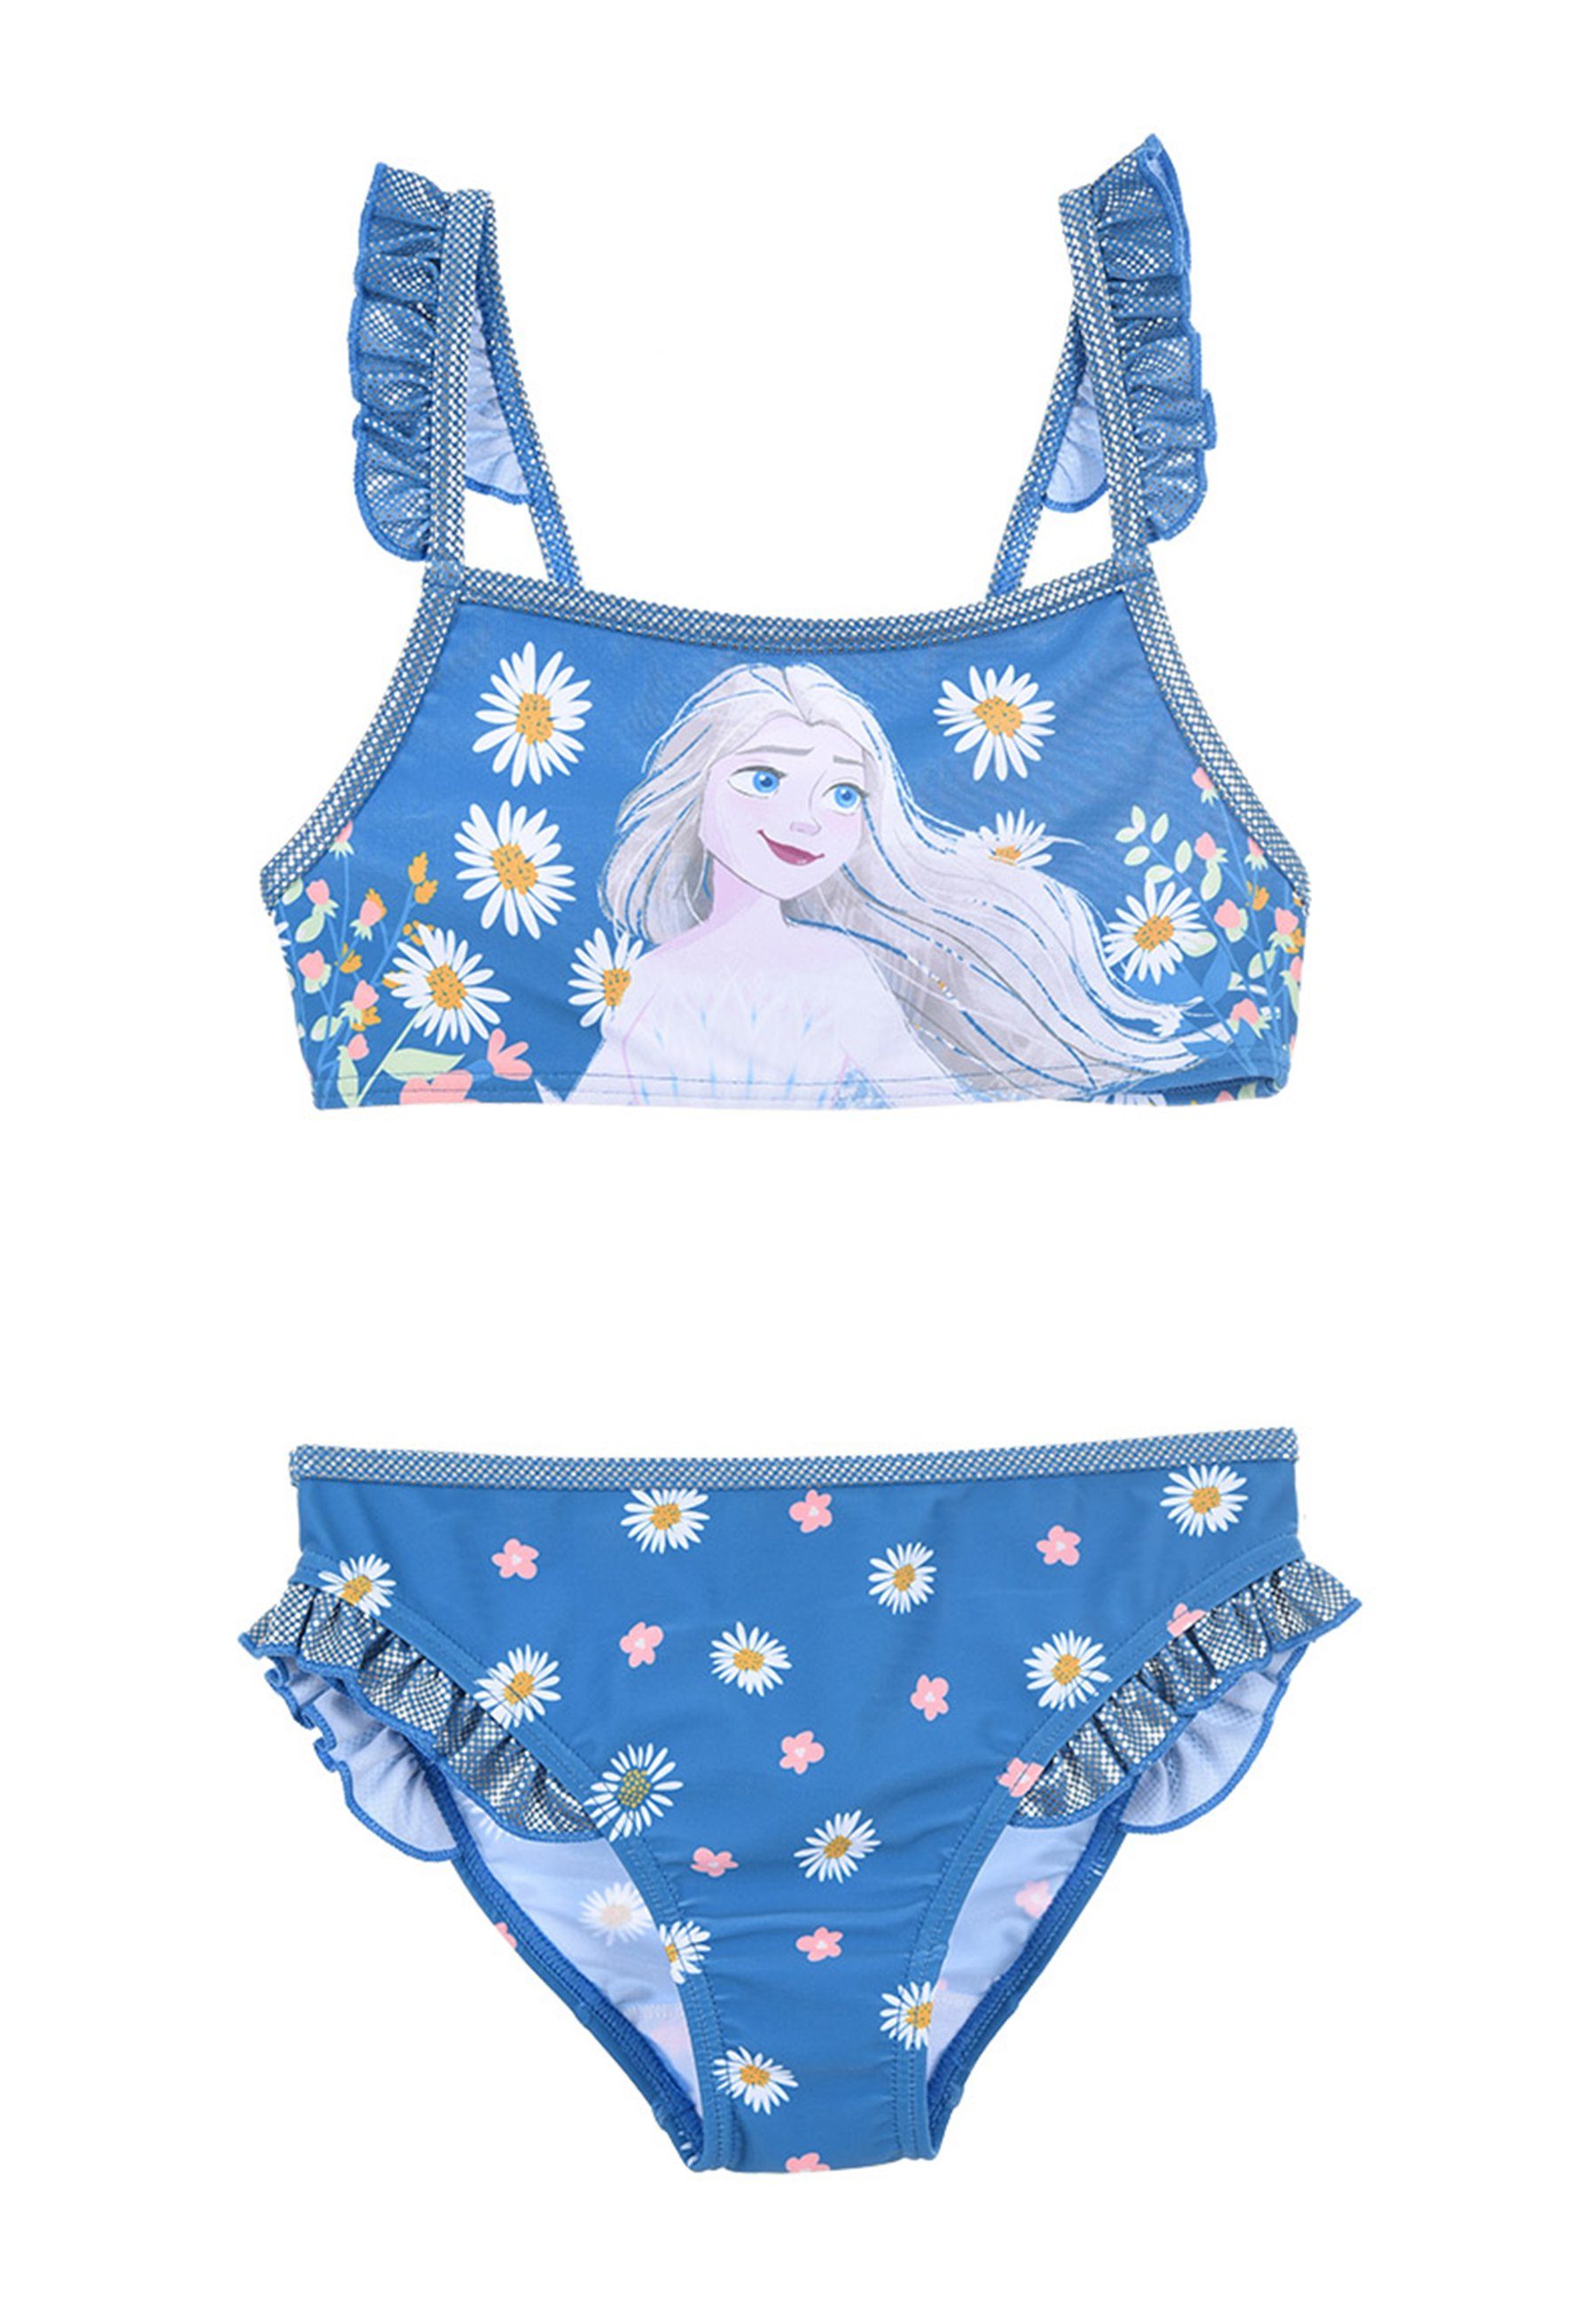 Elsa Frozen Bikini Bade-Set Mädchen Bademode Disney Badeanzug Badeanzug